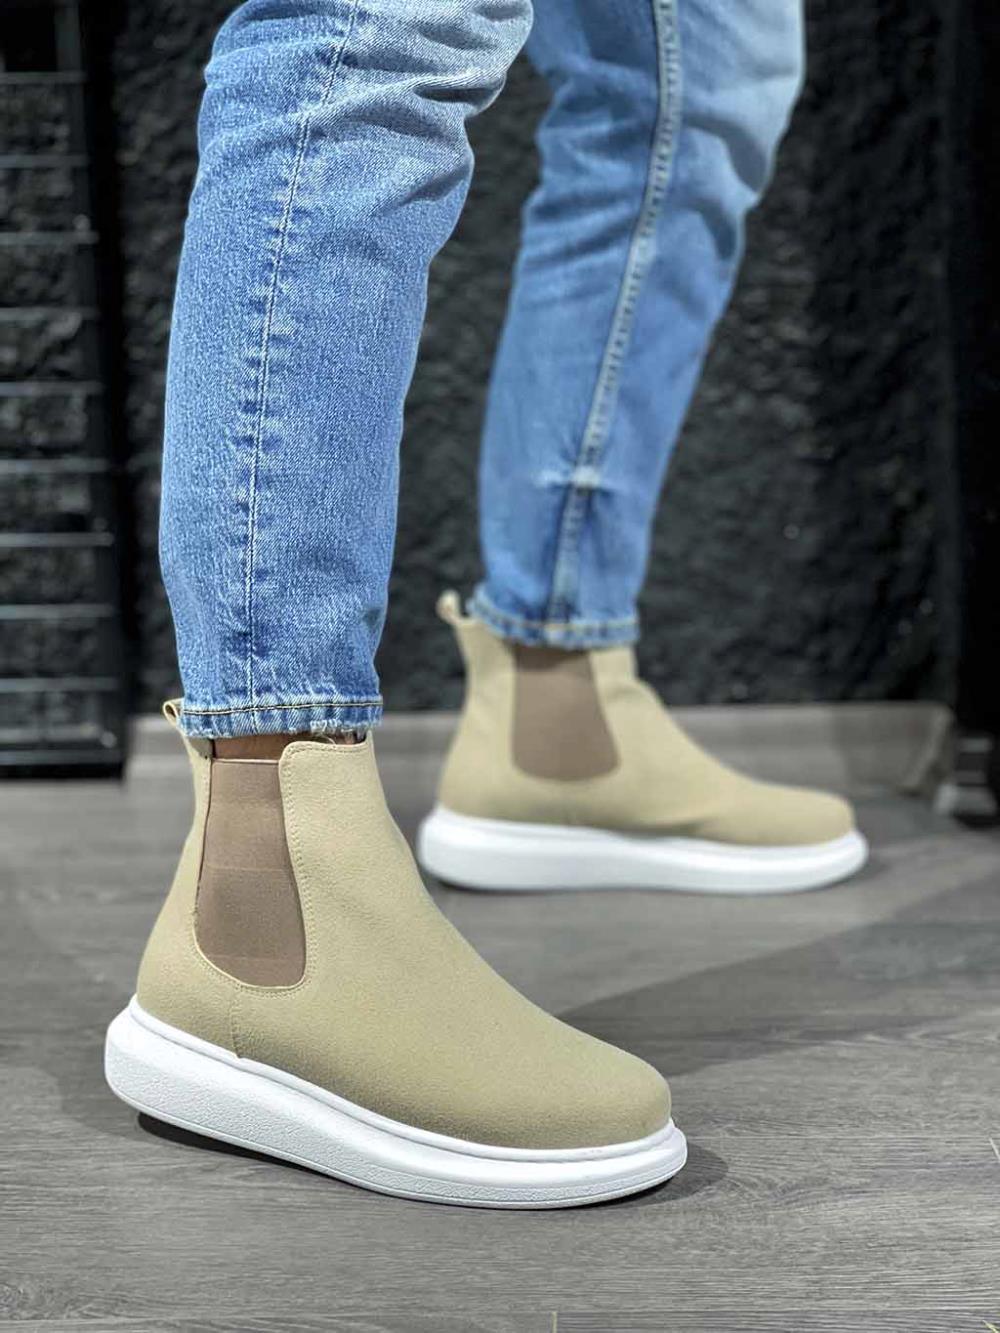 Men's Boots Shoes 111 Mink Suede - STREET MODE ™